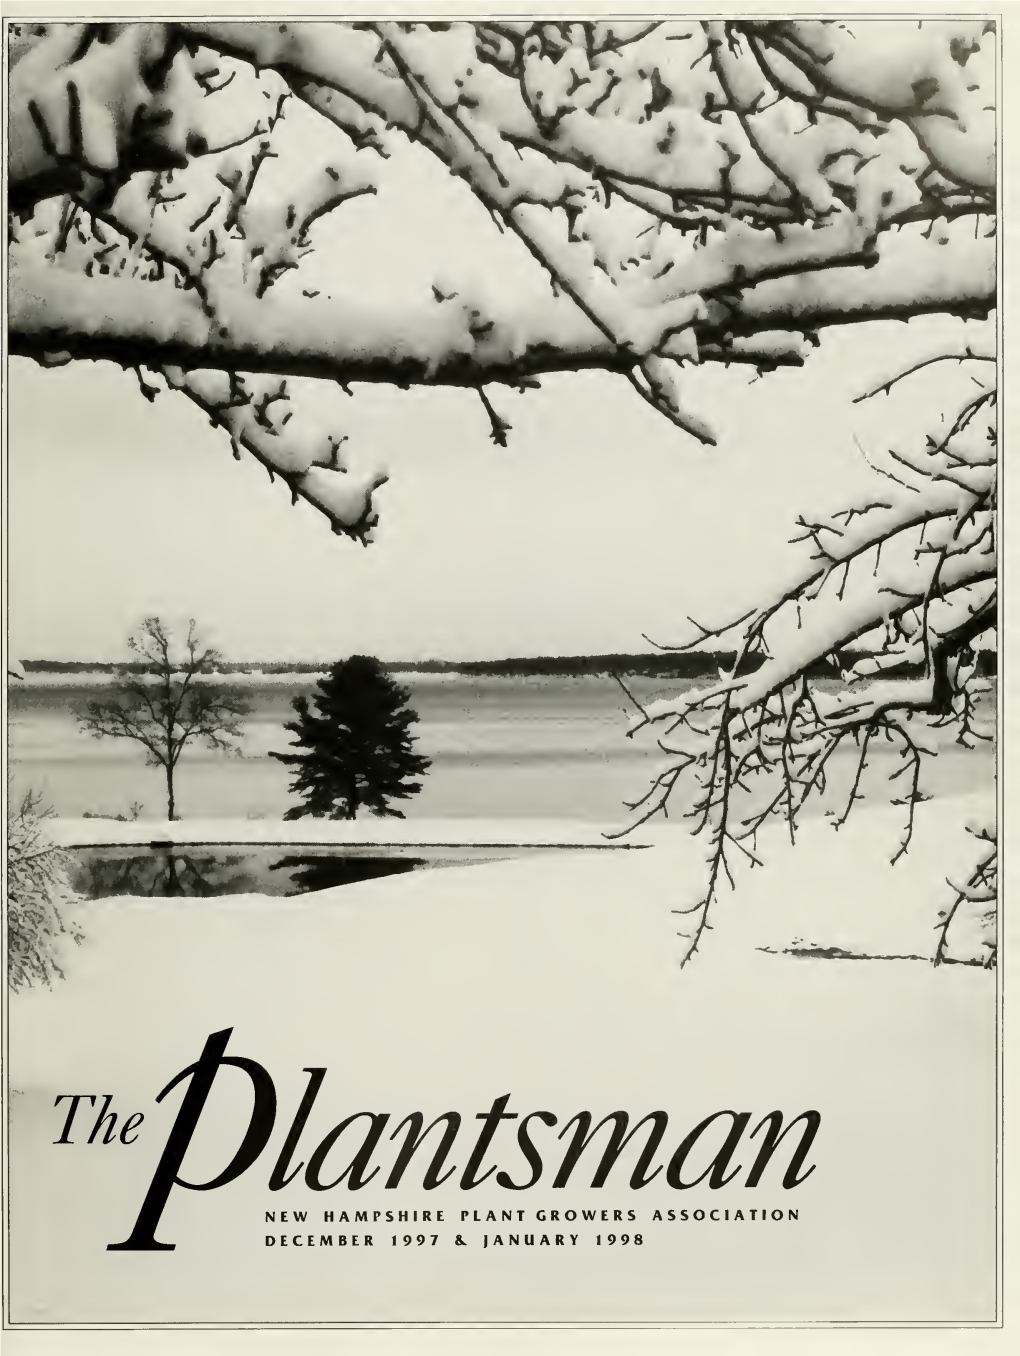 Plantsman, Dec 1997/Jan 1998